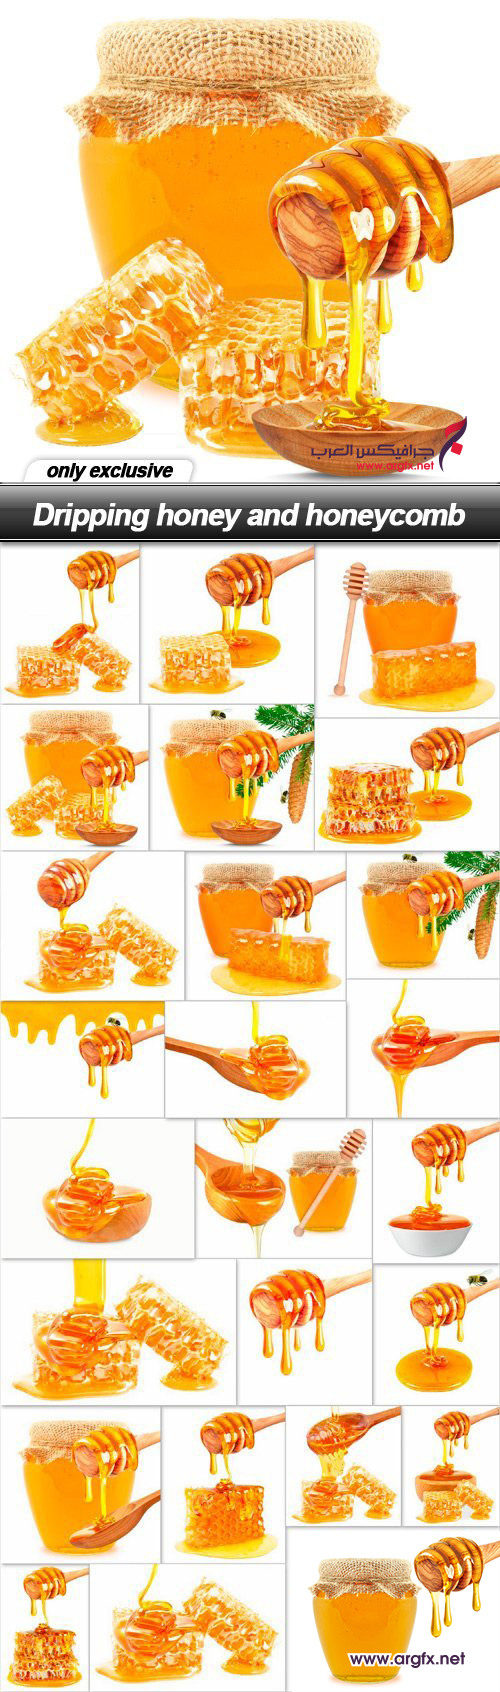 Dripping honey and honeycomb - 25 UHQ JPEG